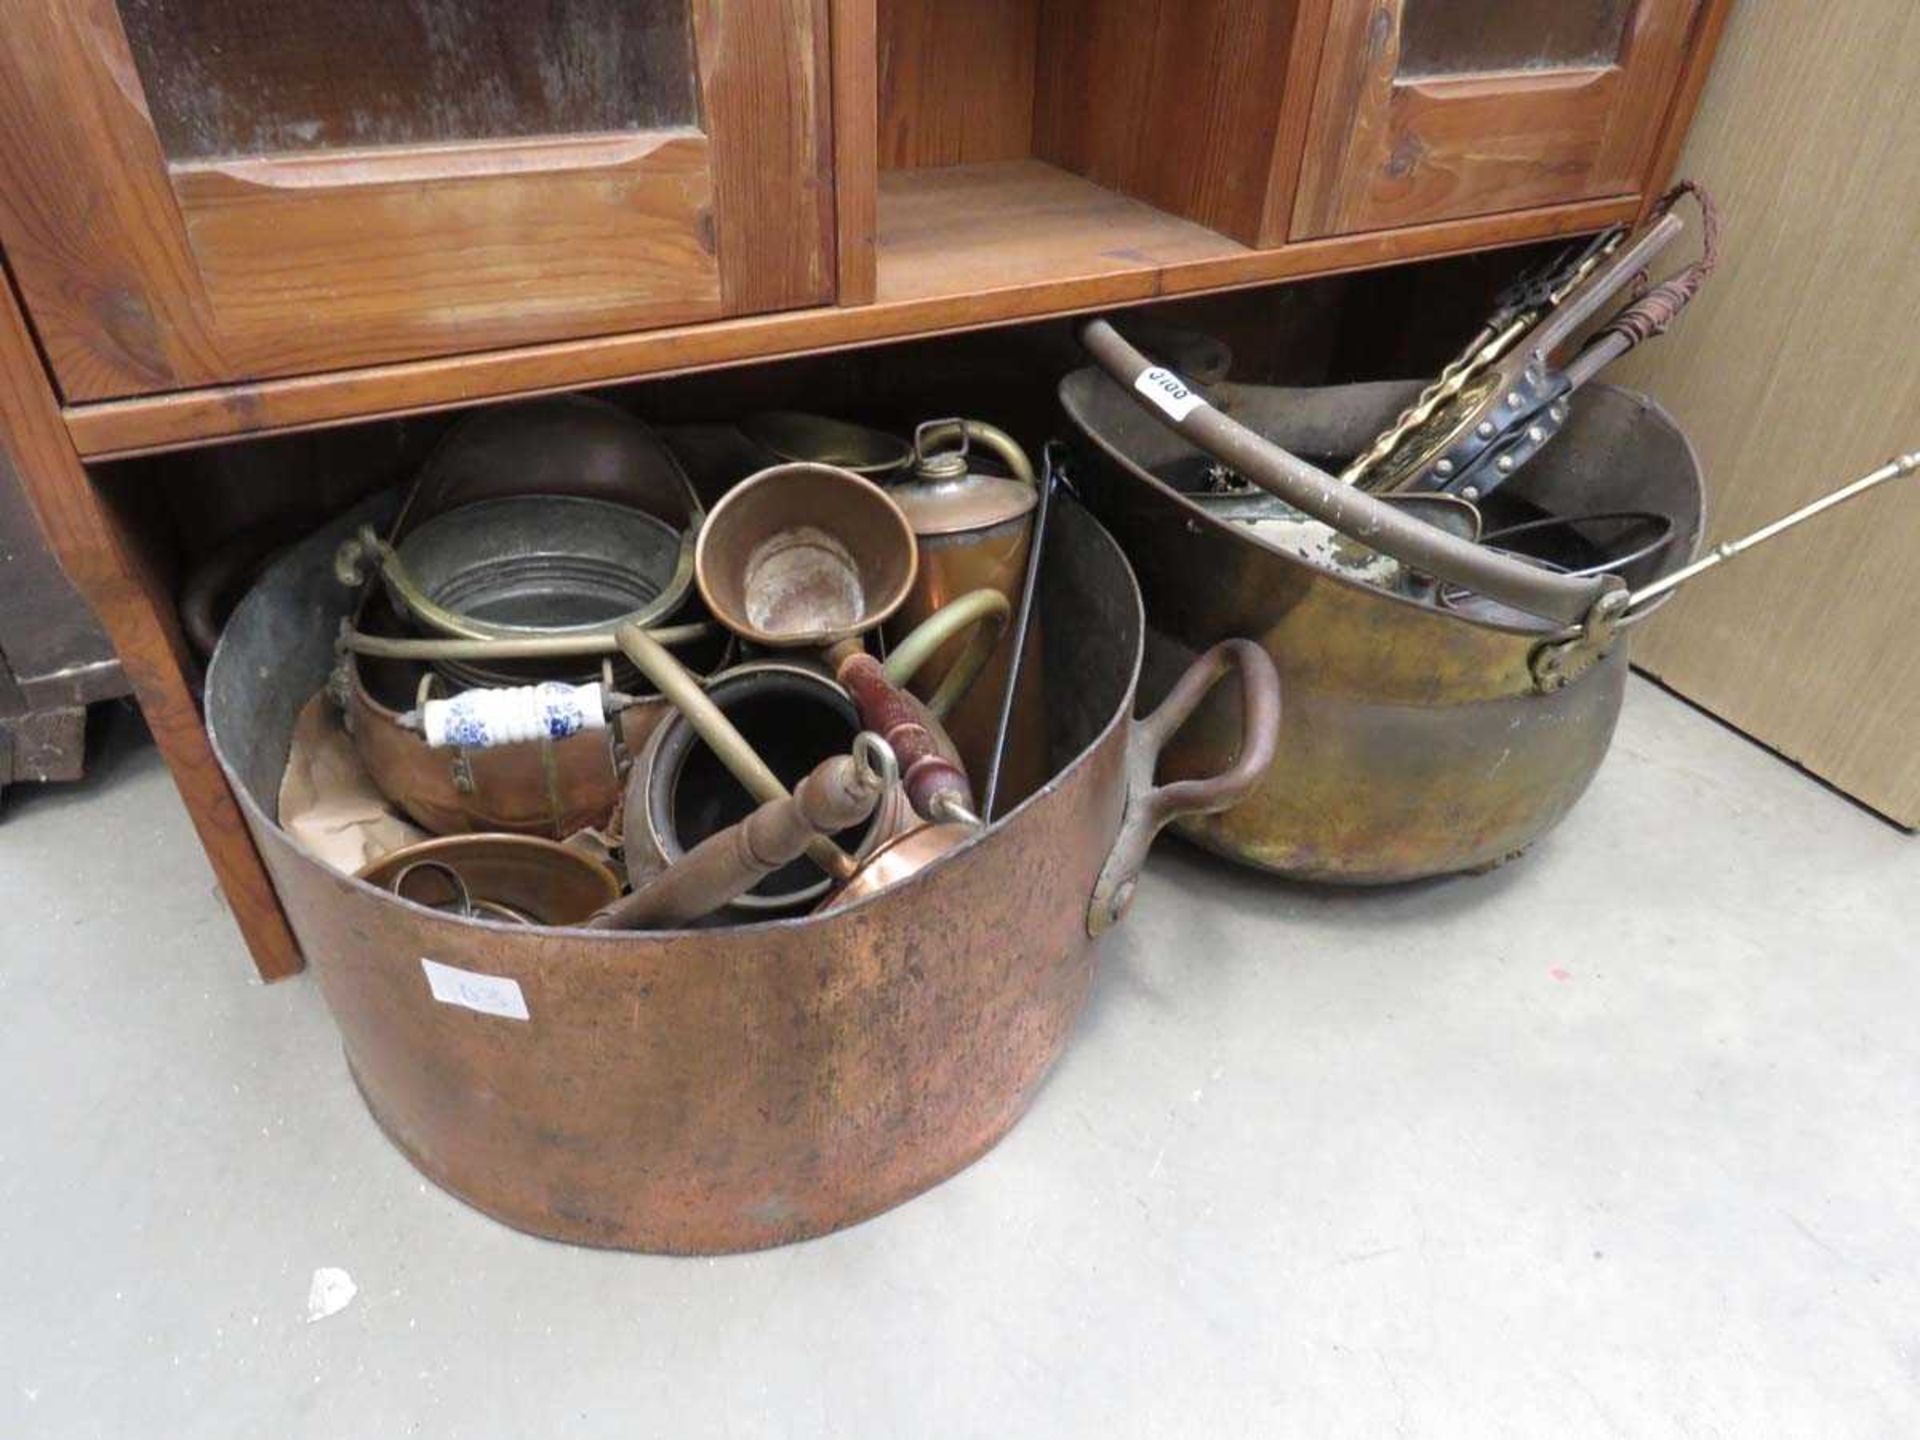 Large copper cooking pot, a coal scuttle, quantity of copper vessels, and a companion set